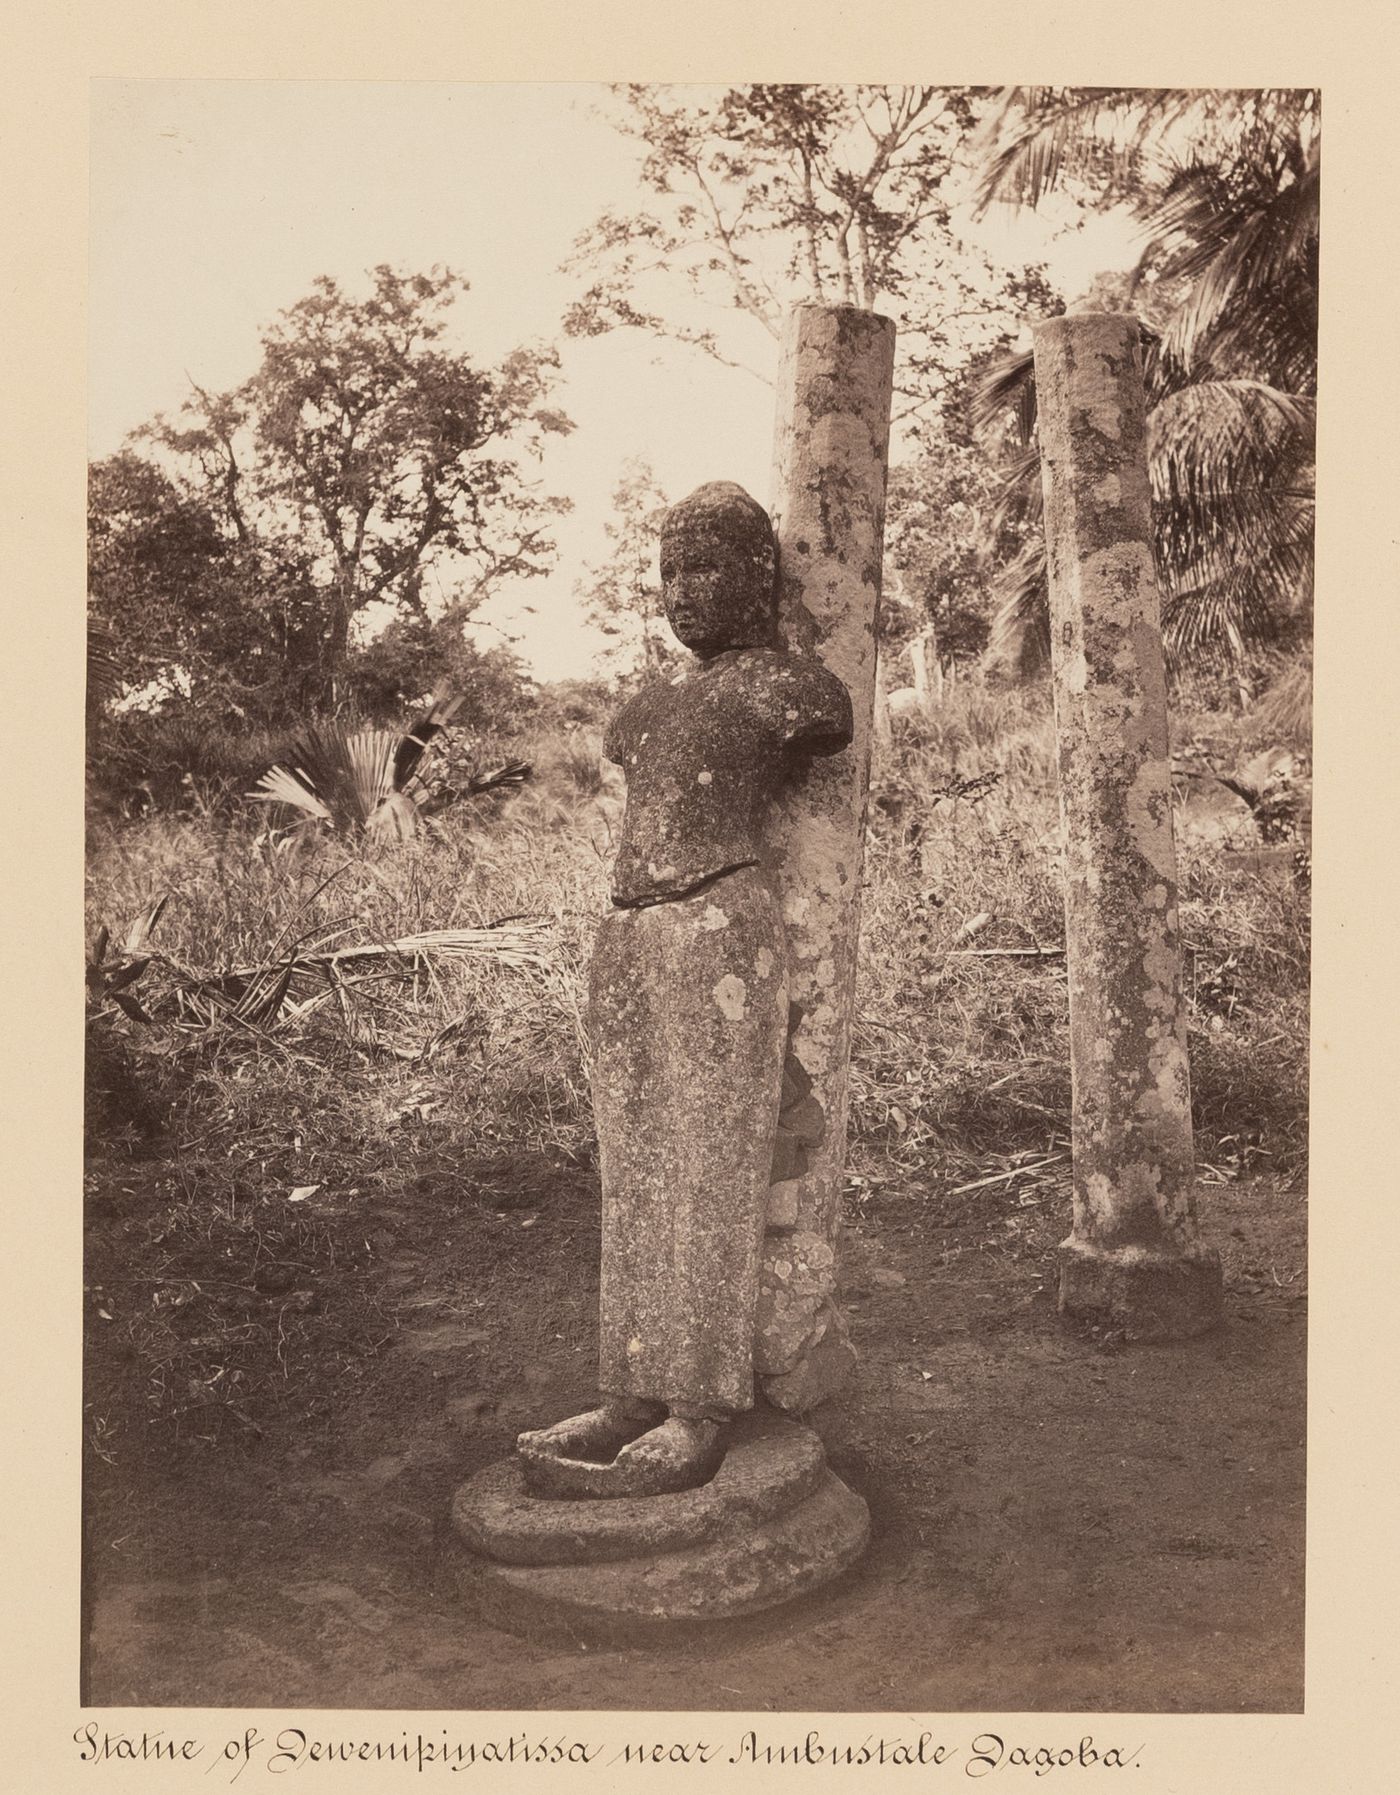 View of a statue of King Devanampiyatissa, near the Ambustala Chetiya (also known as the Ambastala Watadage and the Ambastala Dagoba), Mihintale, Ceylon (now Sri Lanka)